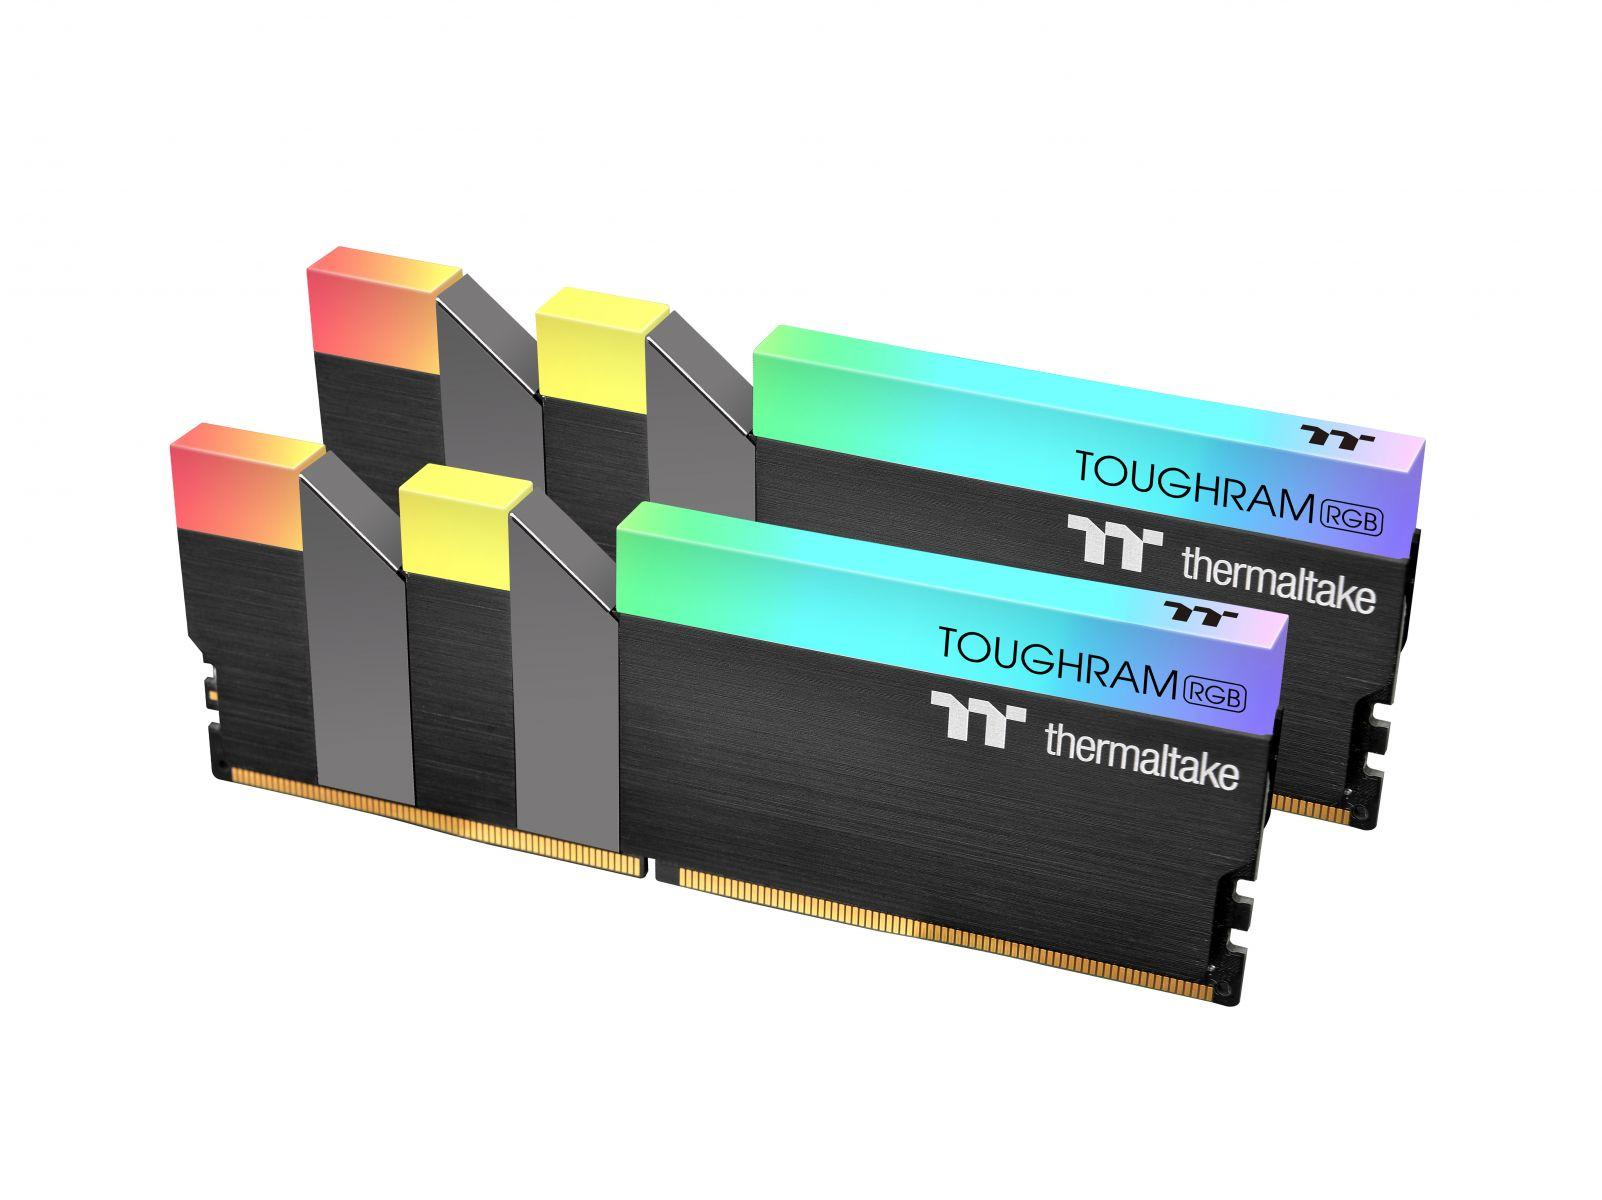 TOUGHRAM GB THERMALTAKE DDR4 Arbeitsspeicher RGB 32